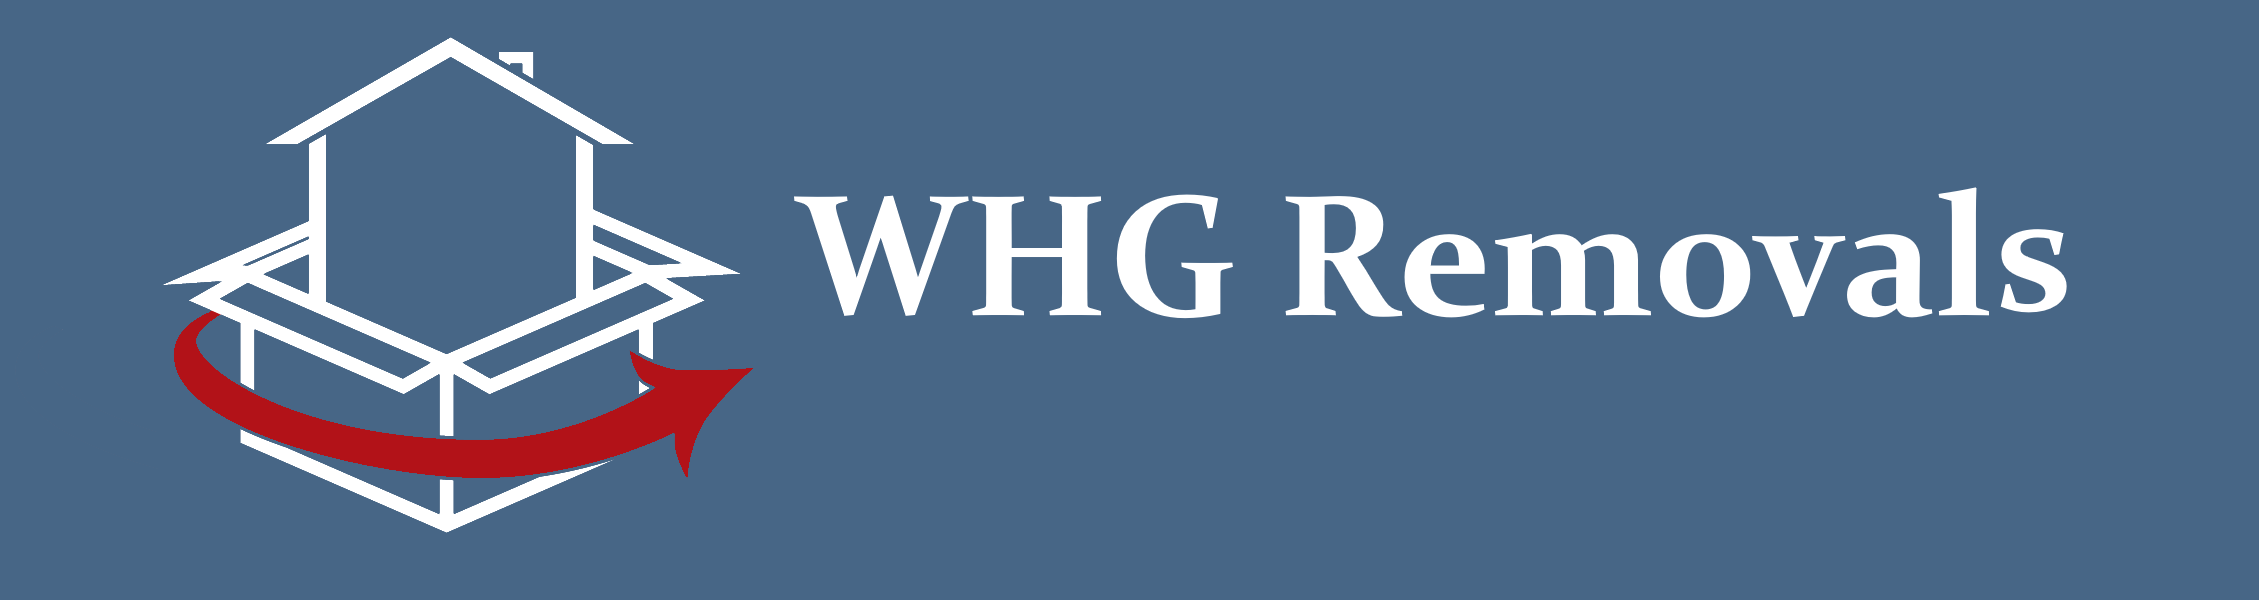 WHG Removals